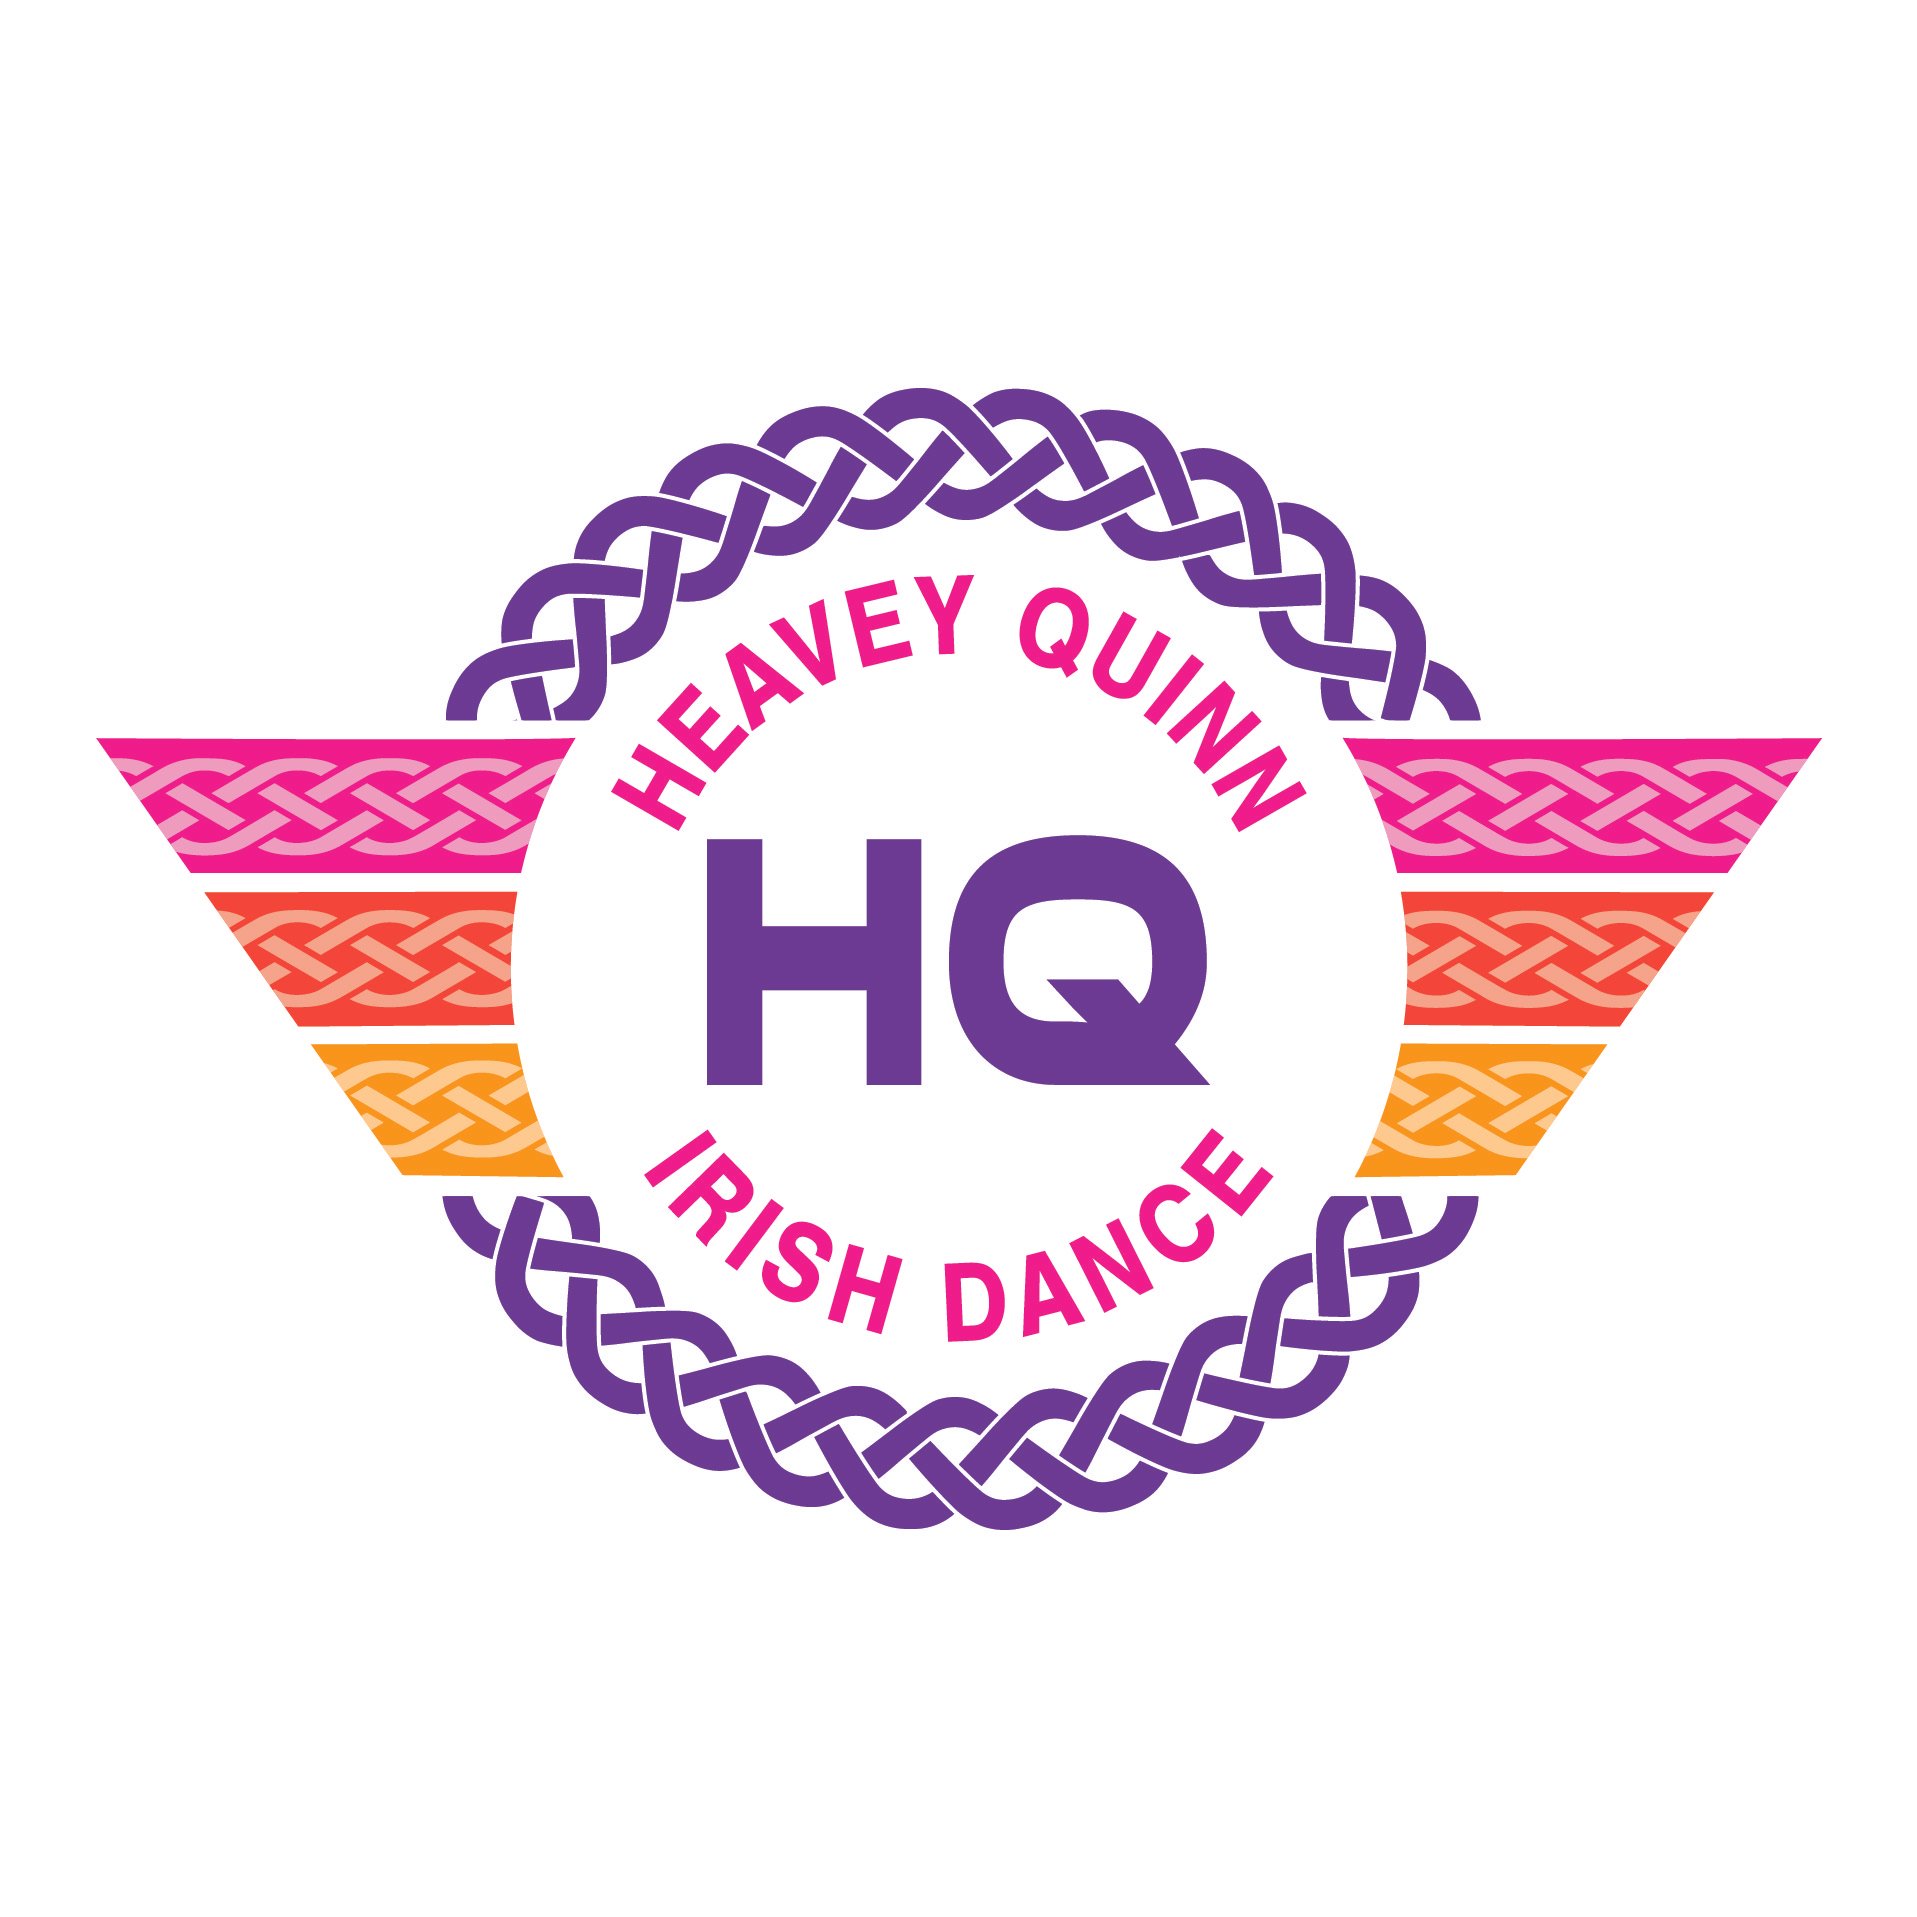 Heavey Quinn Logo